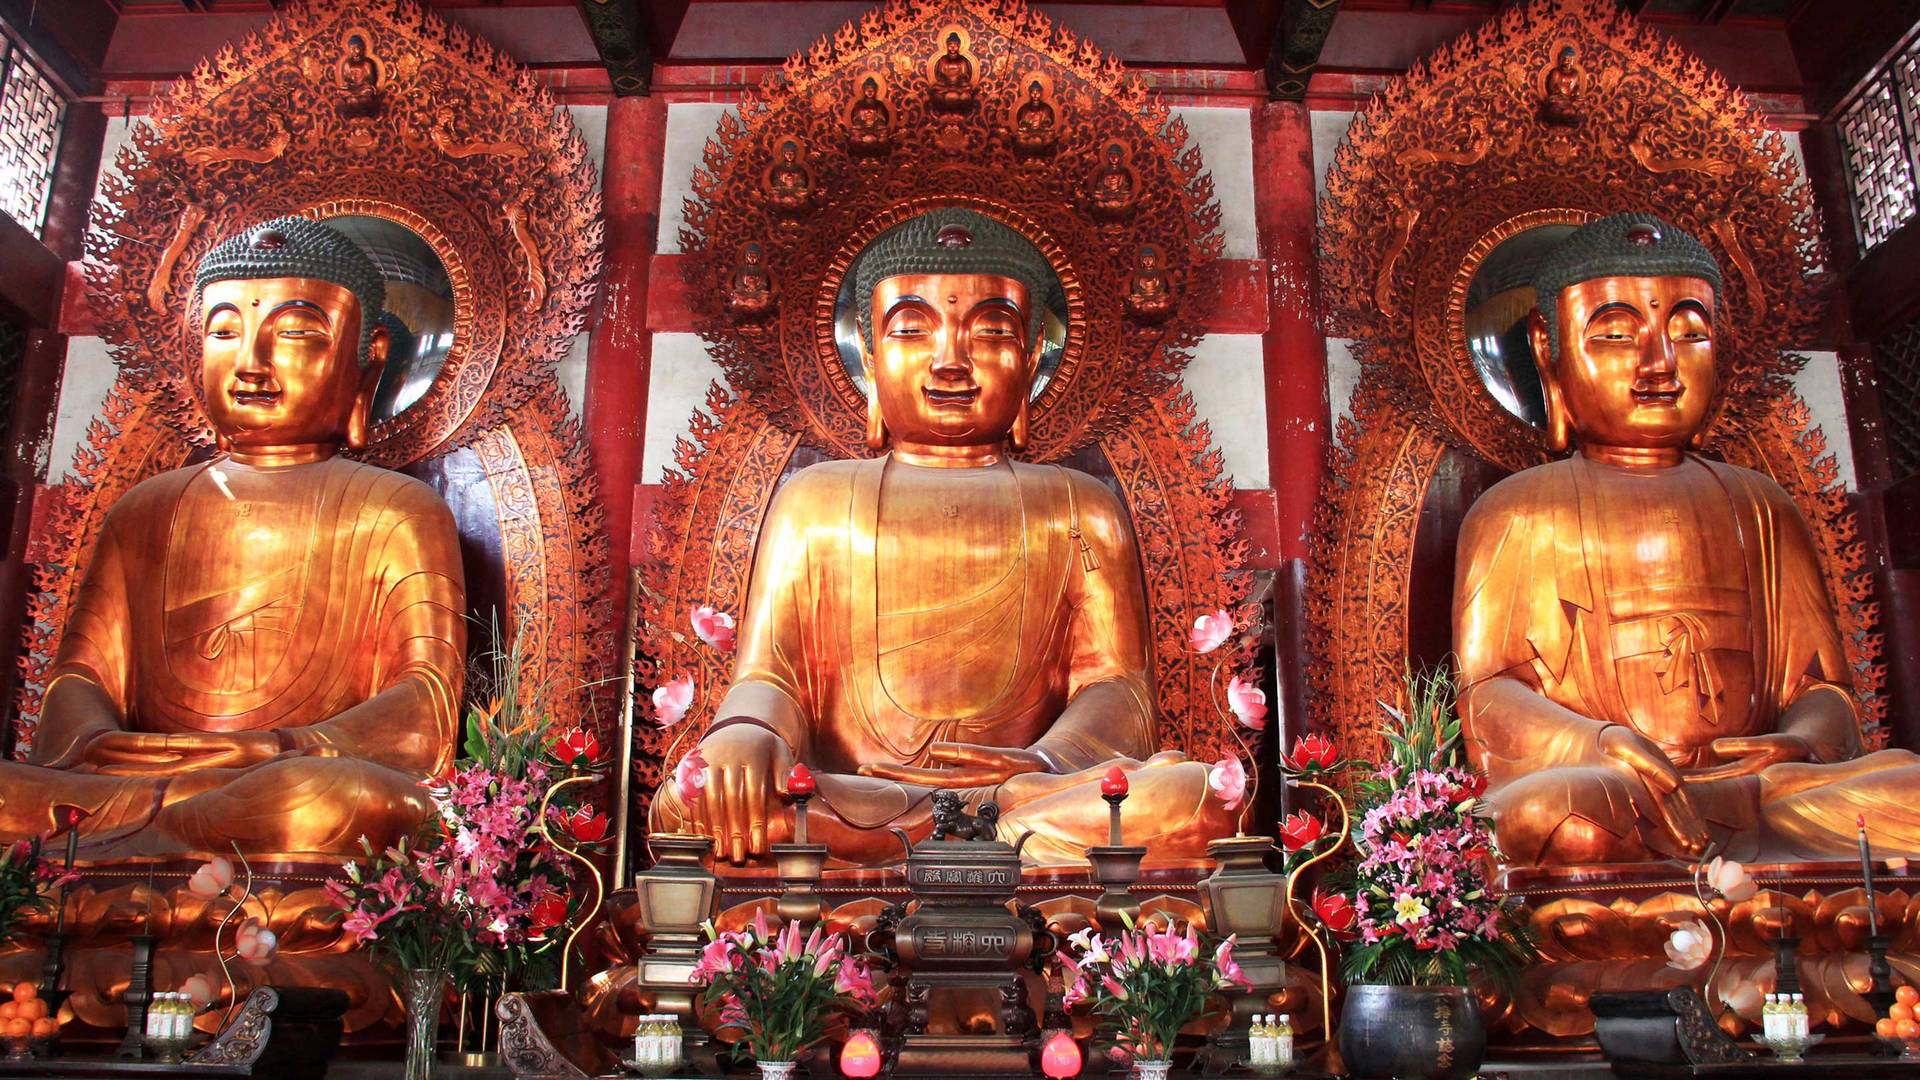 Sculpture of the Buddha in Guangzhou